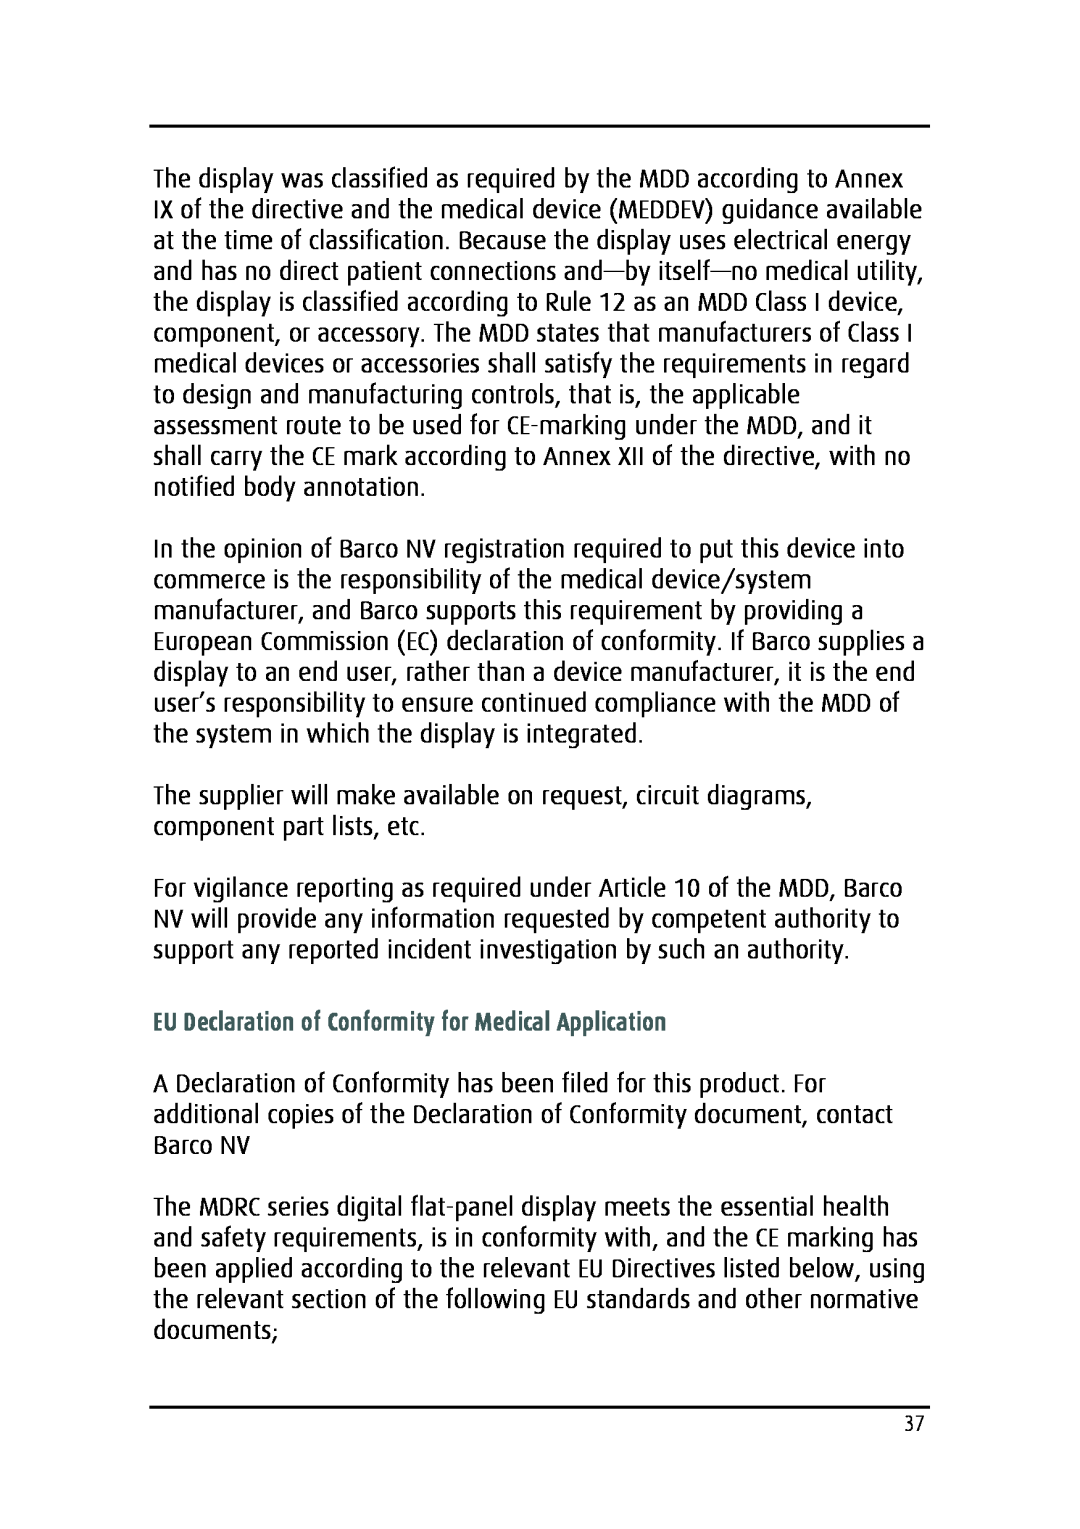 Barco MDRC-2124 user manual EU Declaration of Conformity for Medical Application 